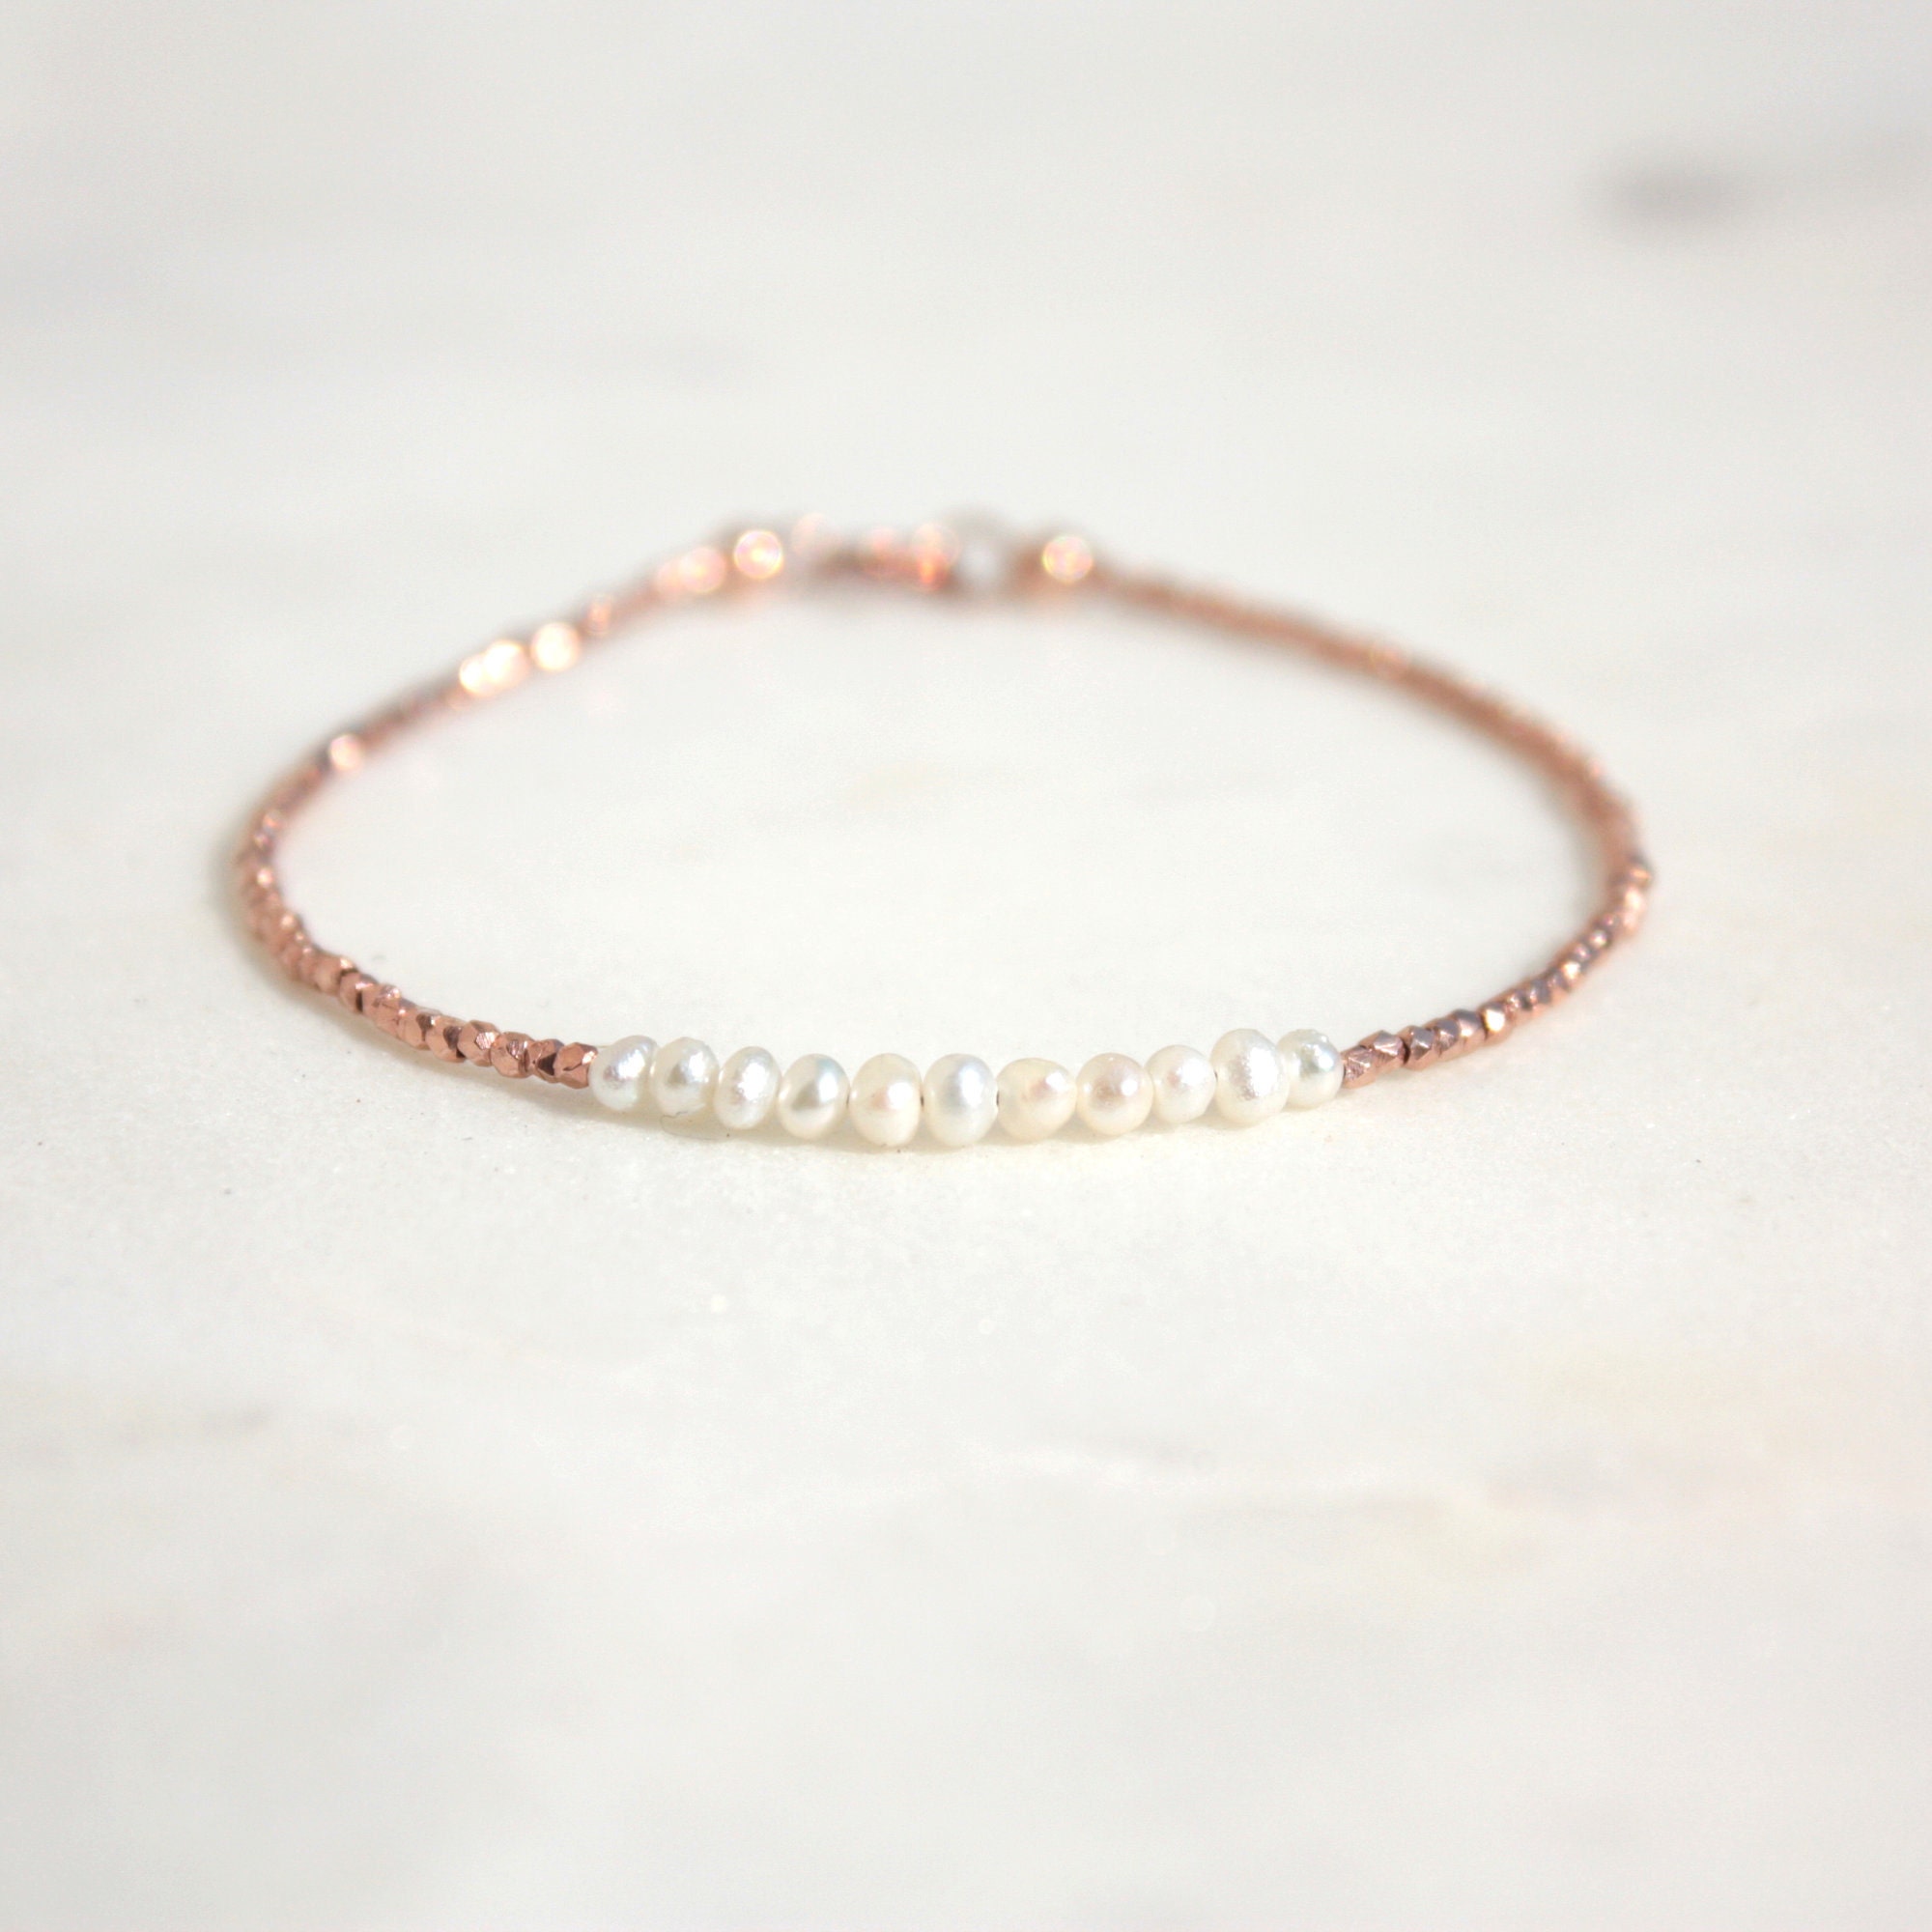 Vintage inspired crystal pearl bracelet in rose gold or silver finish